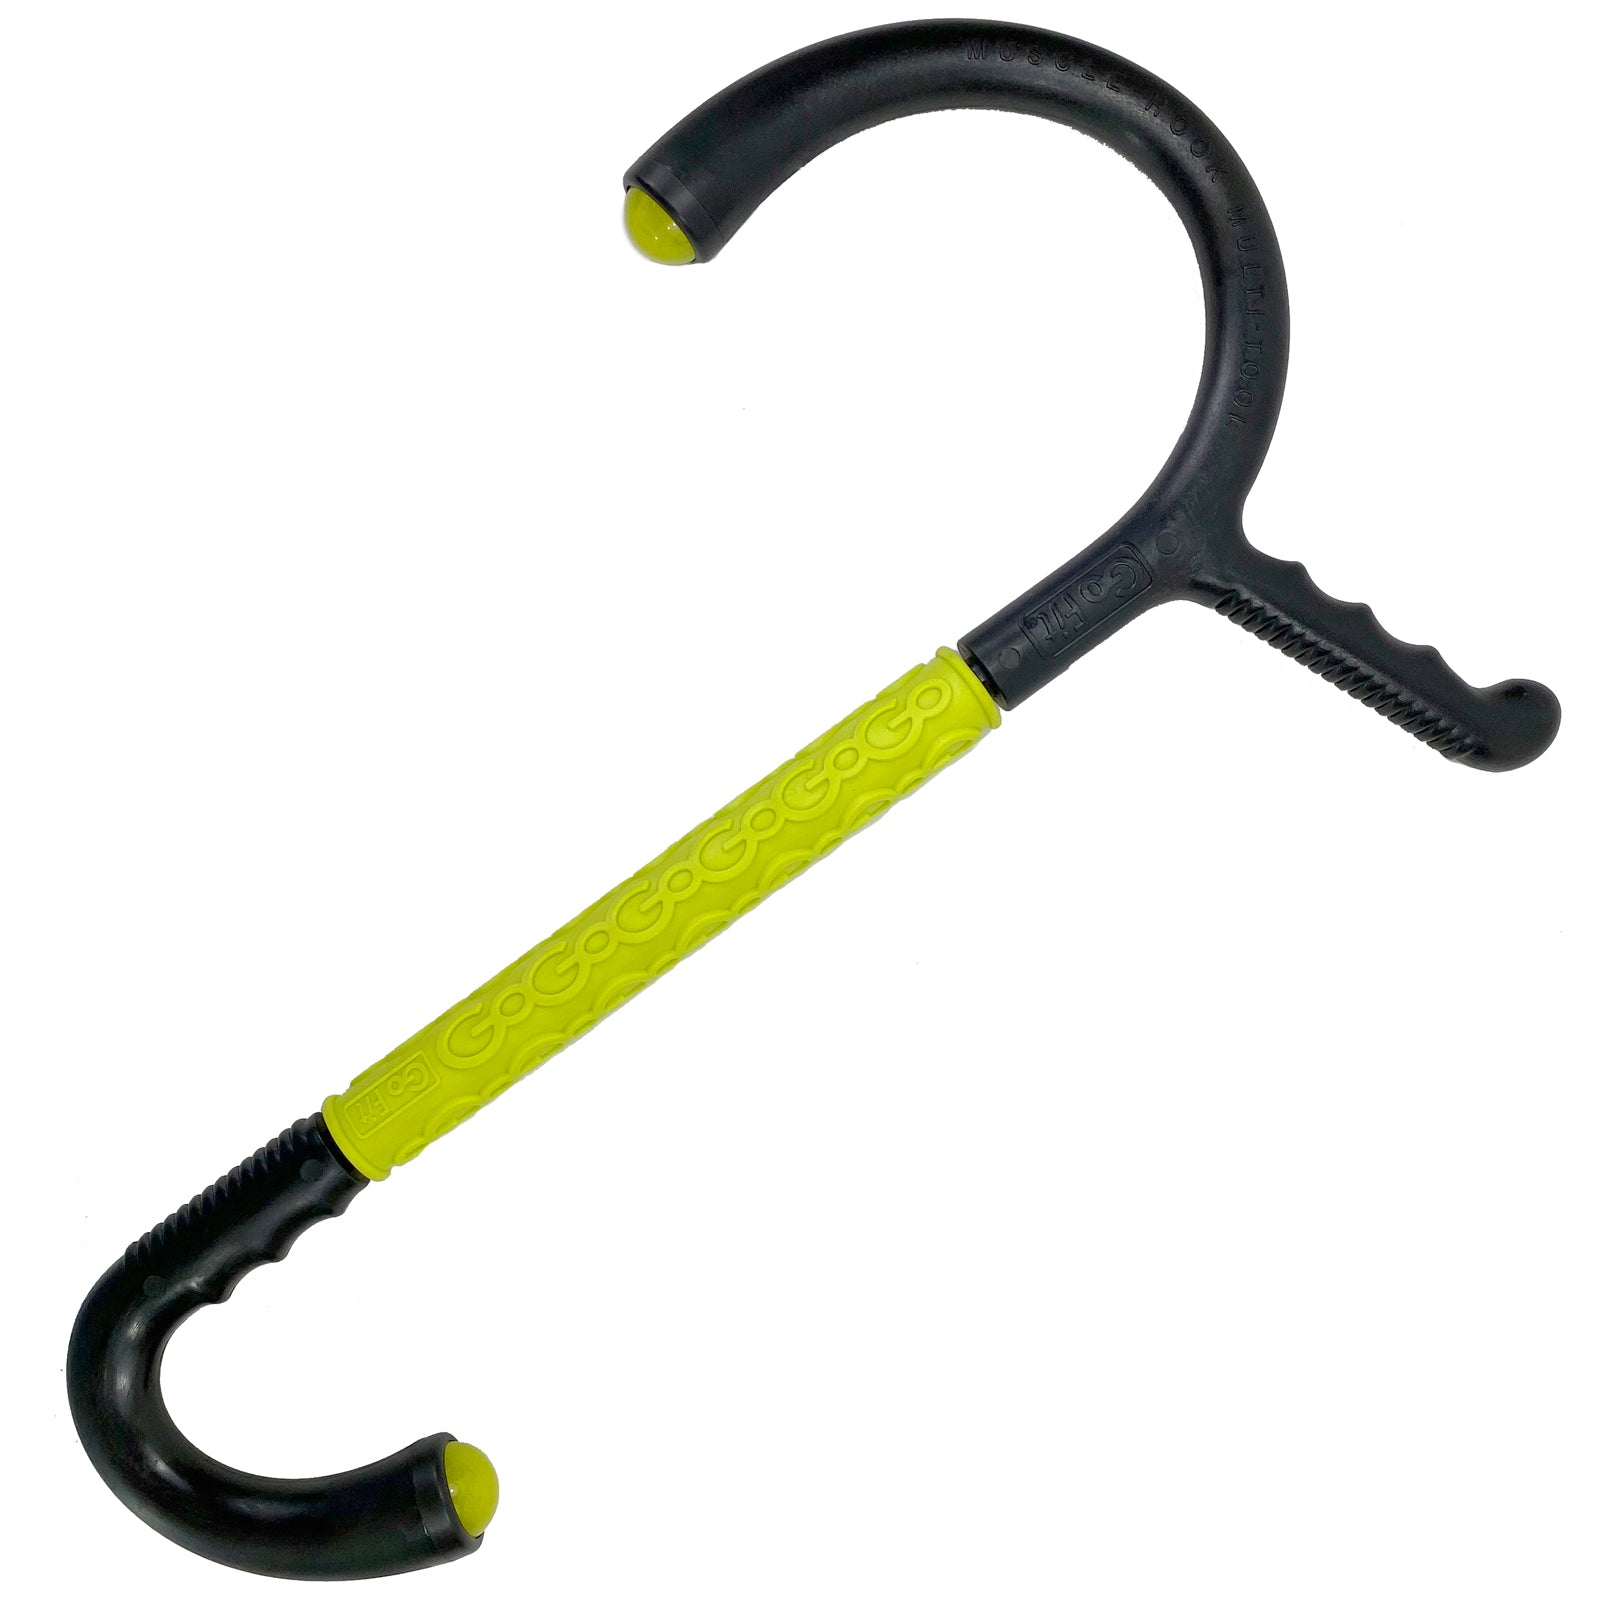 Muscle Hook Multi-Tool